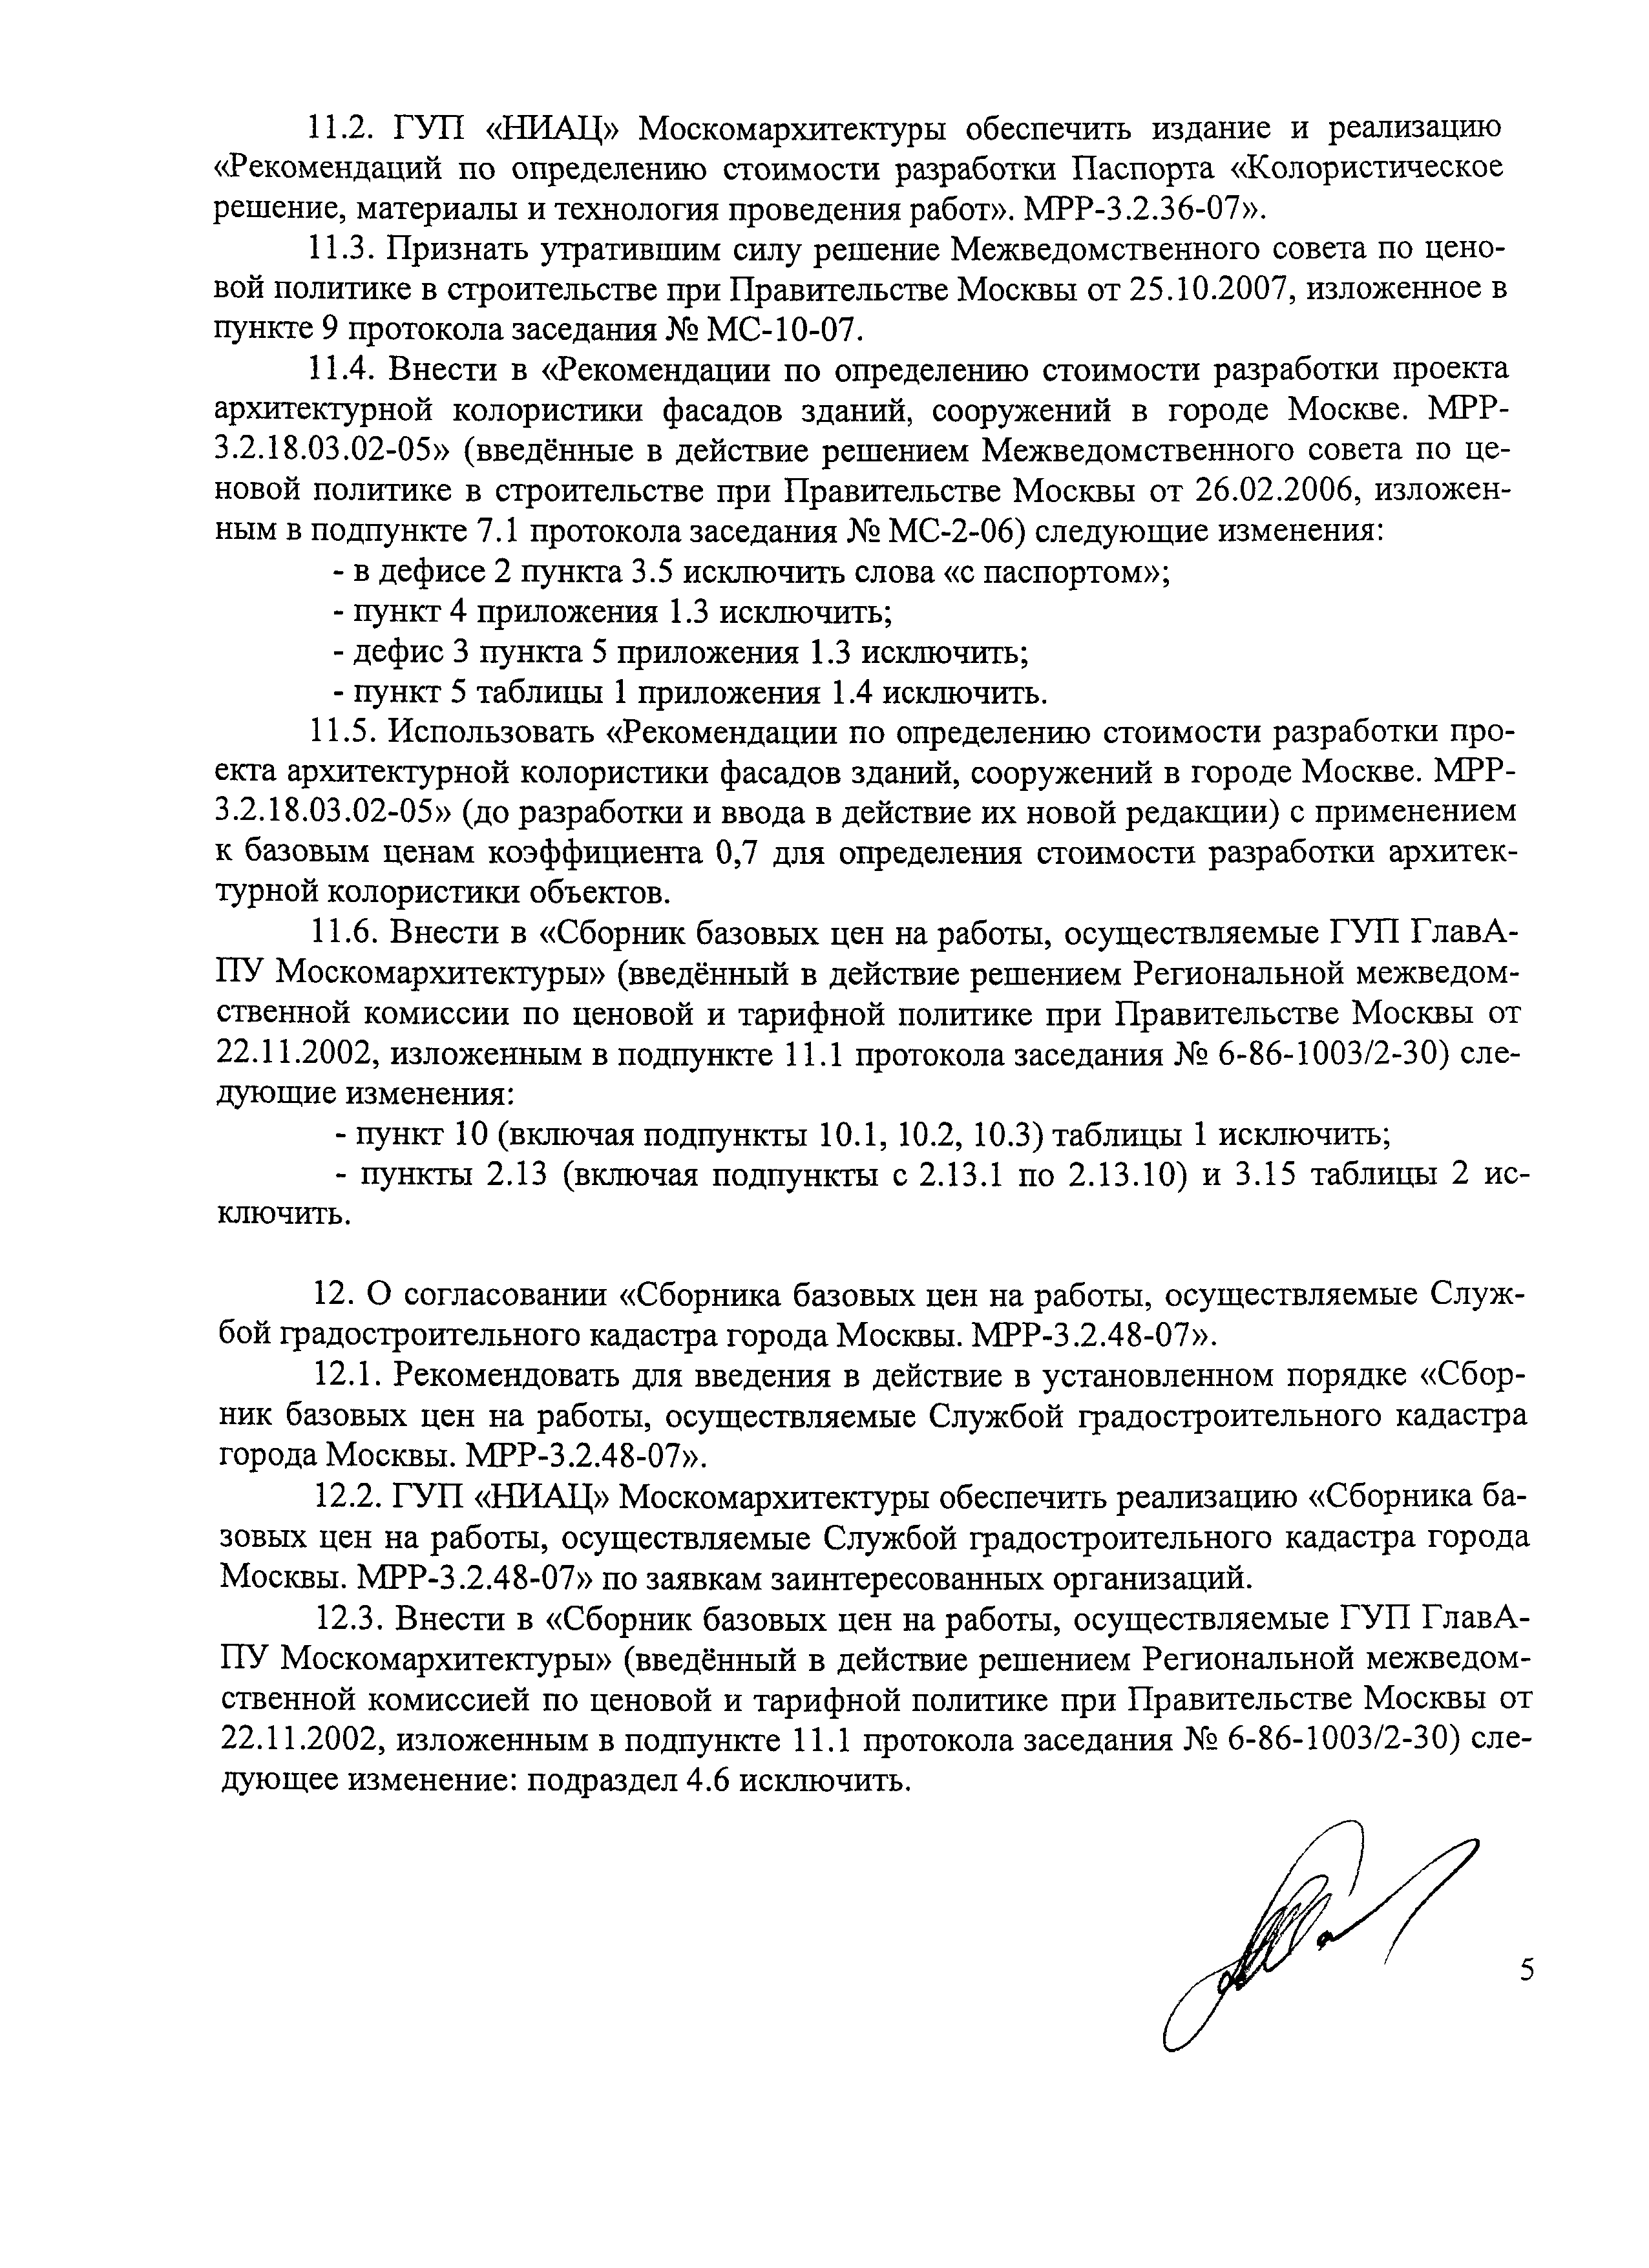 Протокол МС-11-07